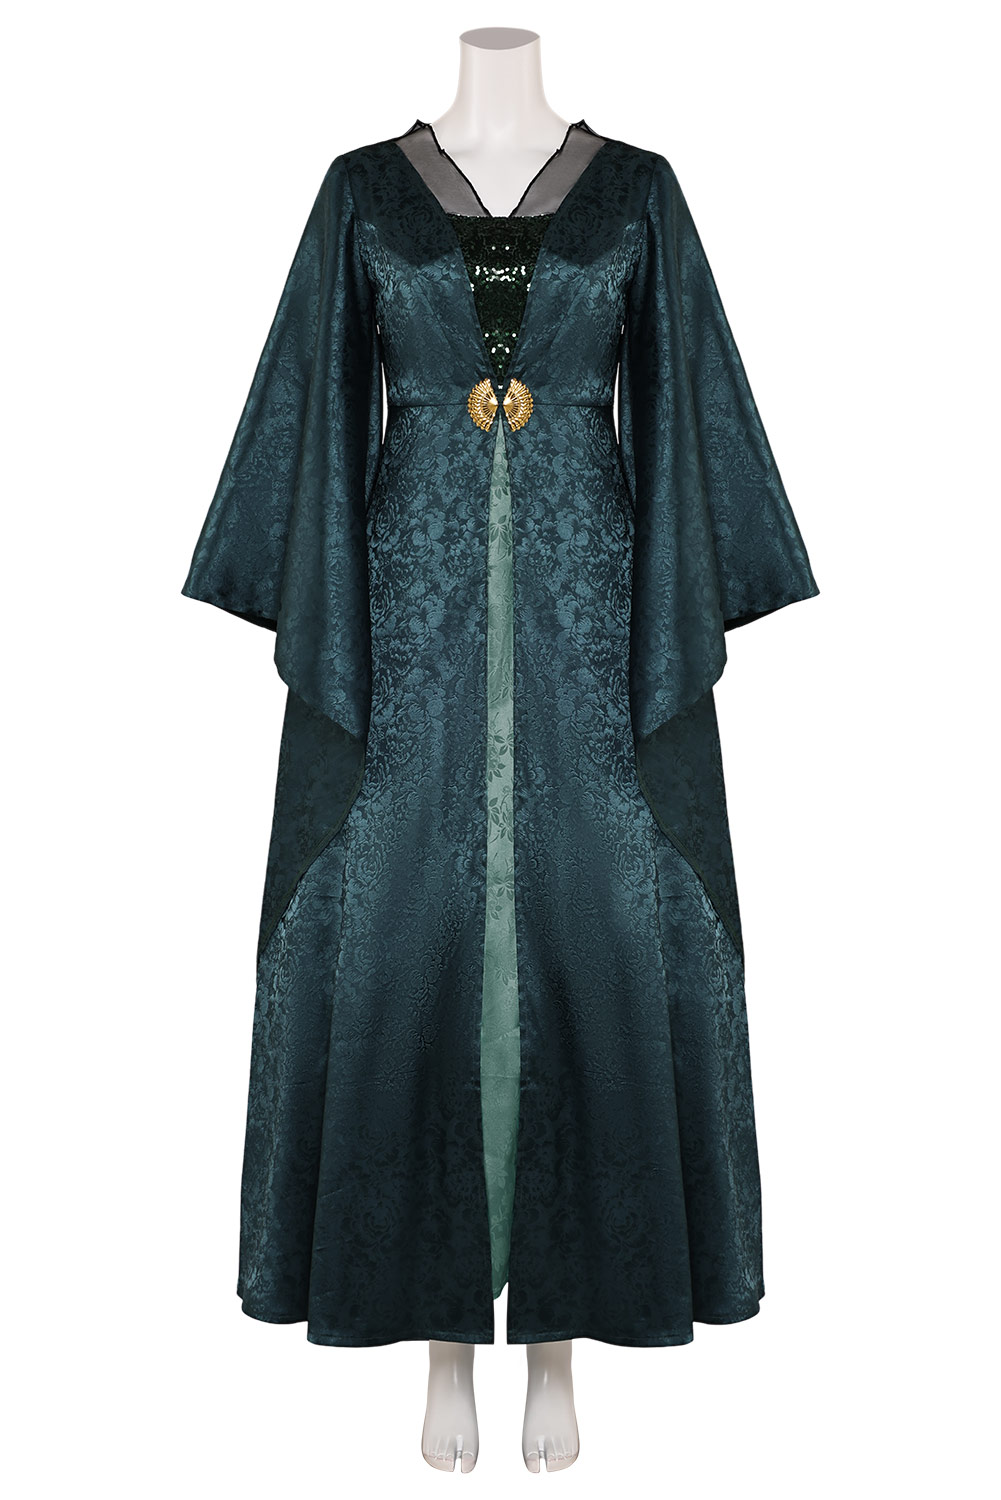 TV House of the Dragon Helaena Targaryen Dark Green Dress Outfits Halloween Carnival Suit Cosplay Costume